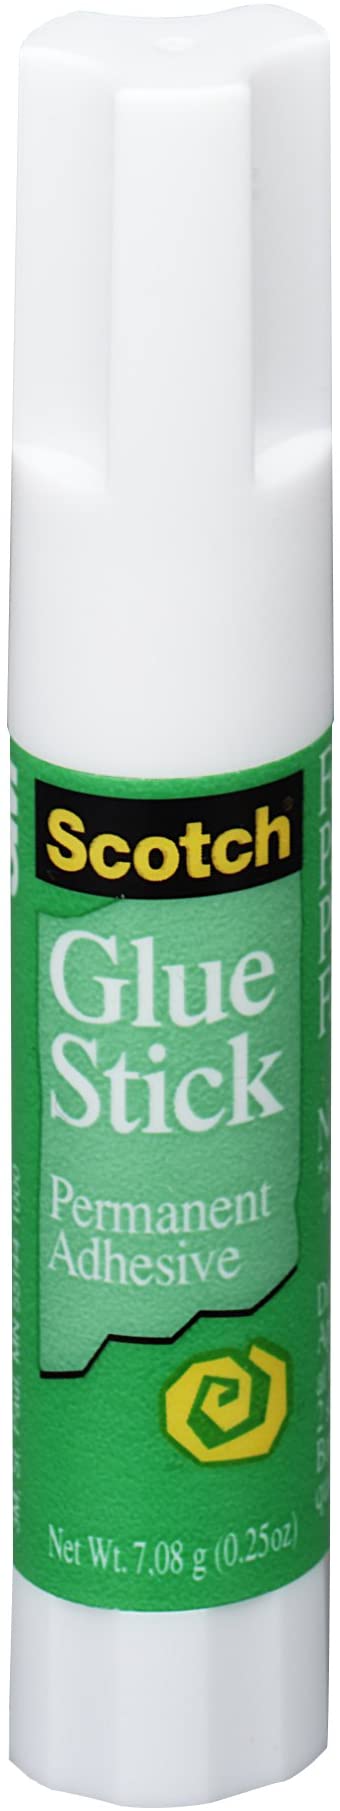 Scotch Permanent Adhesive Glue Stick, 7g Stick, 1-Pack, White [OB]